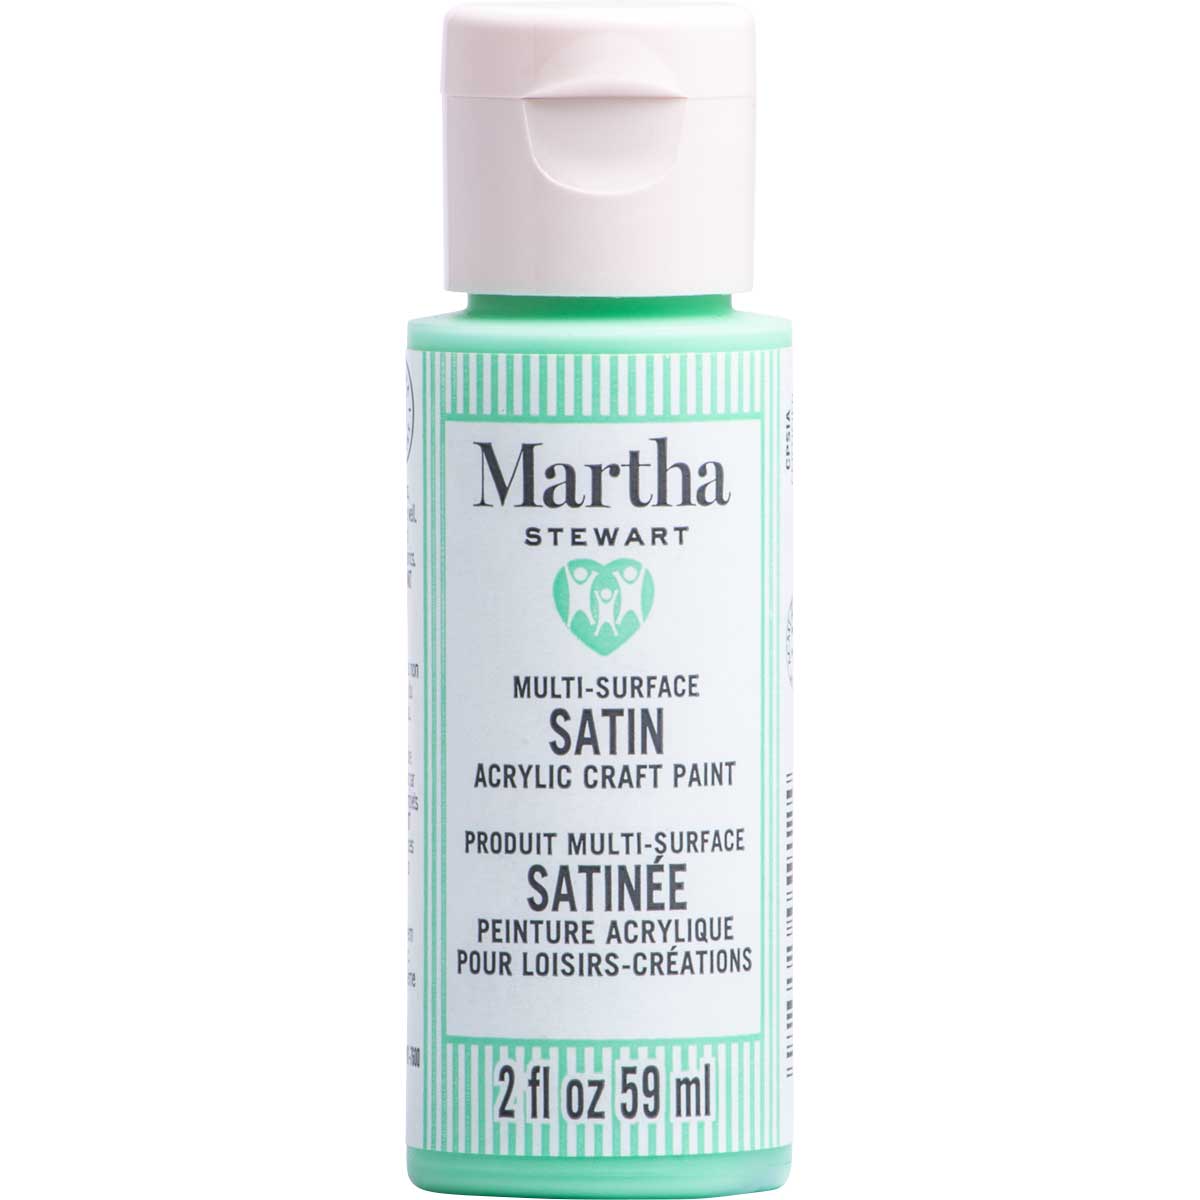 Martha Stewart ® Multi-Surface Satin Acrylic Craft Paint CPSIA - Sand Bucket Green, 2 oz. - 5912